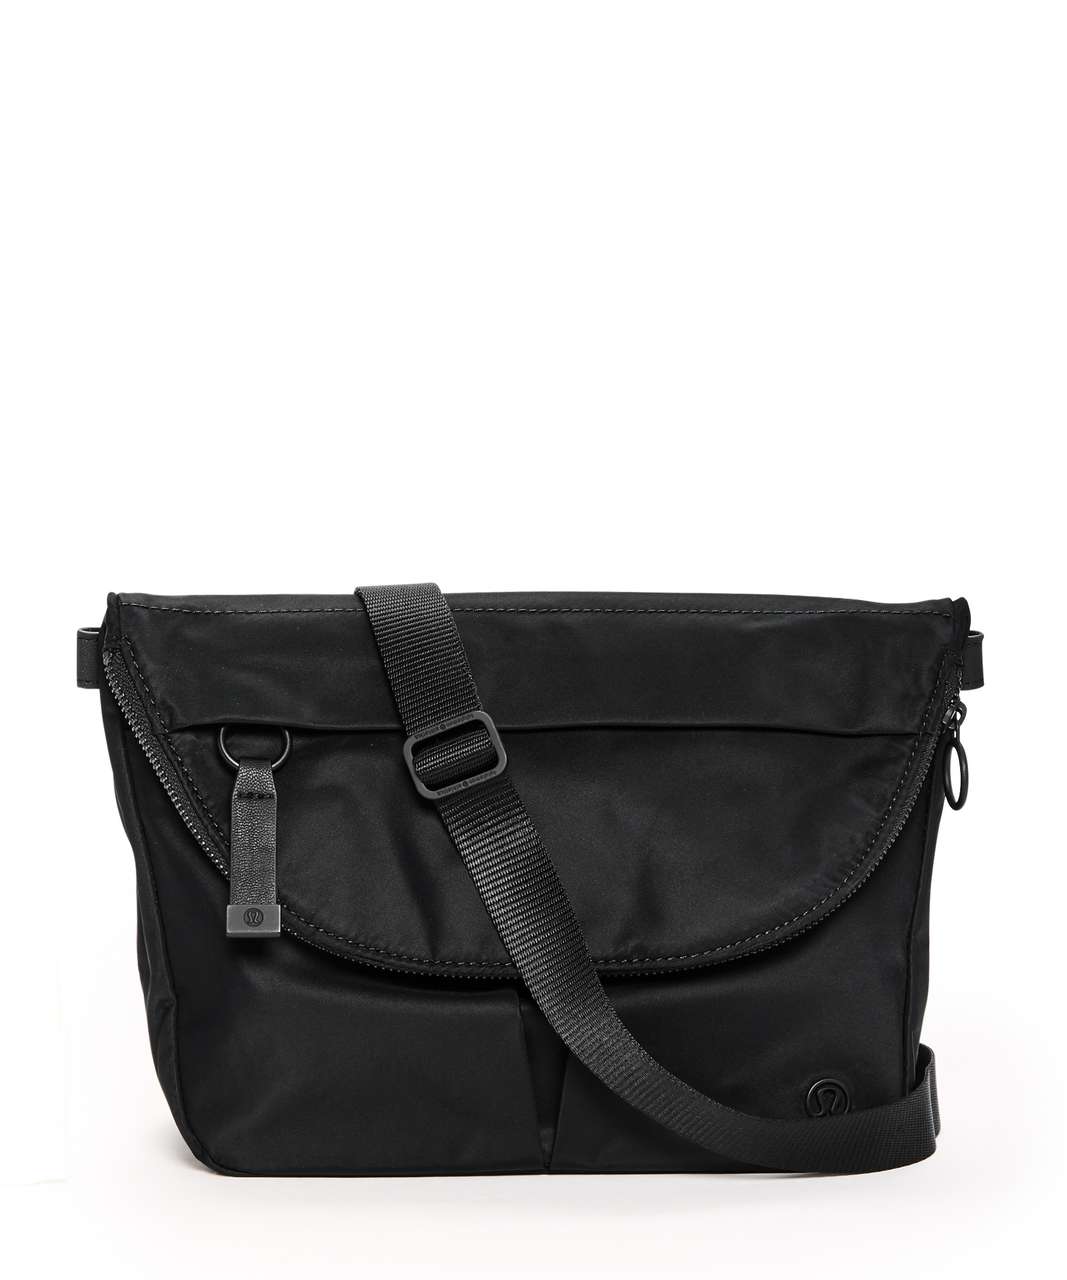 Lululemon All Night Festival Bag 5 L (Black): Handbags